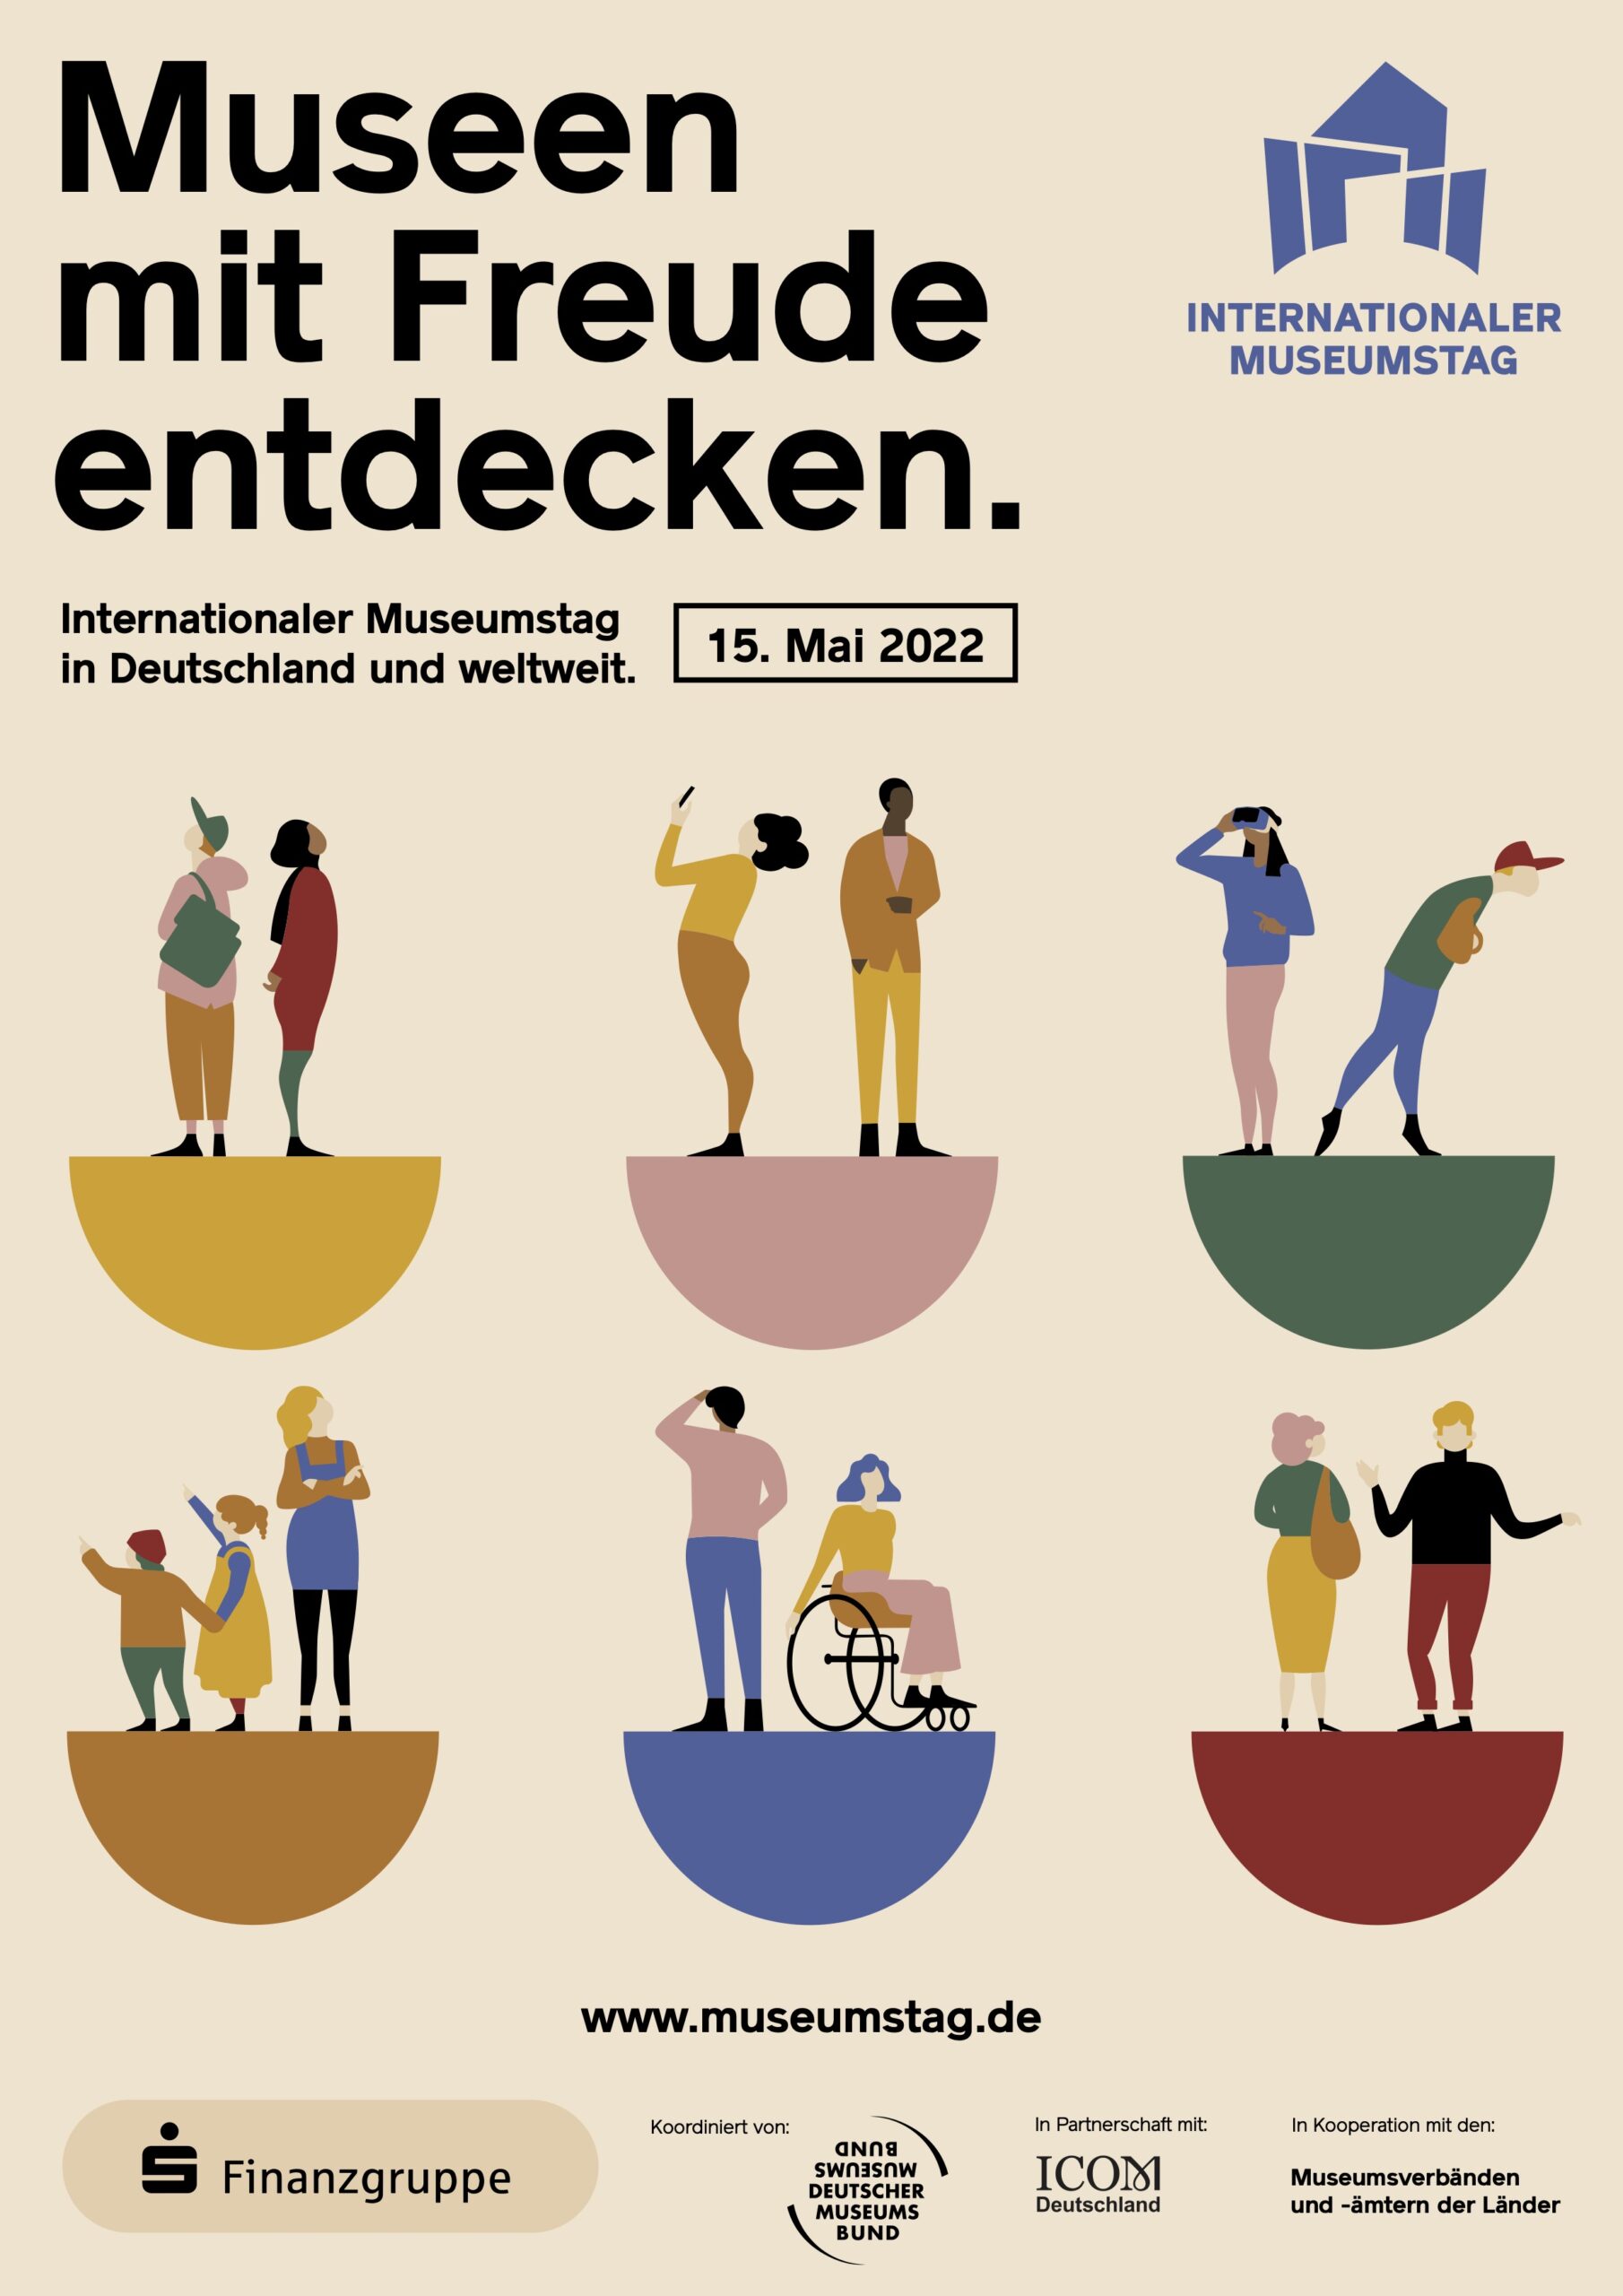 Internationaler Museumstag 15. Mai 2022